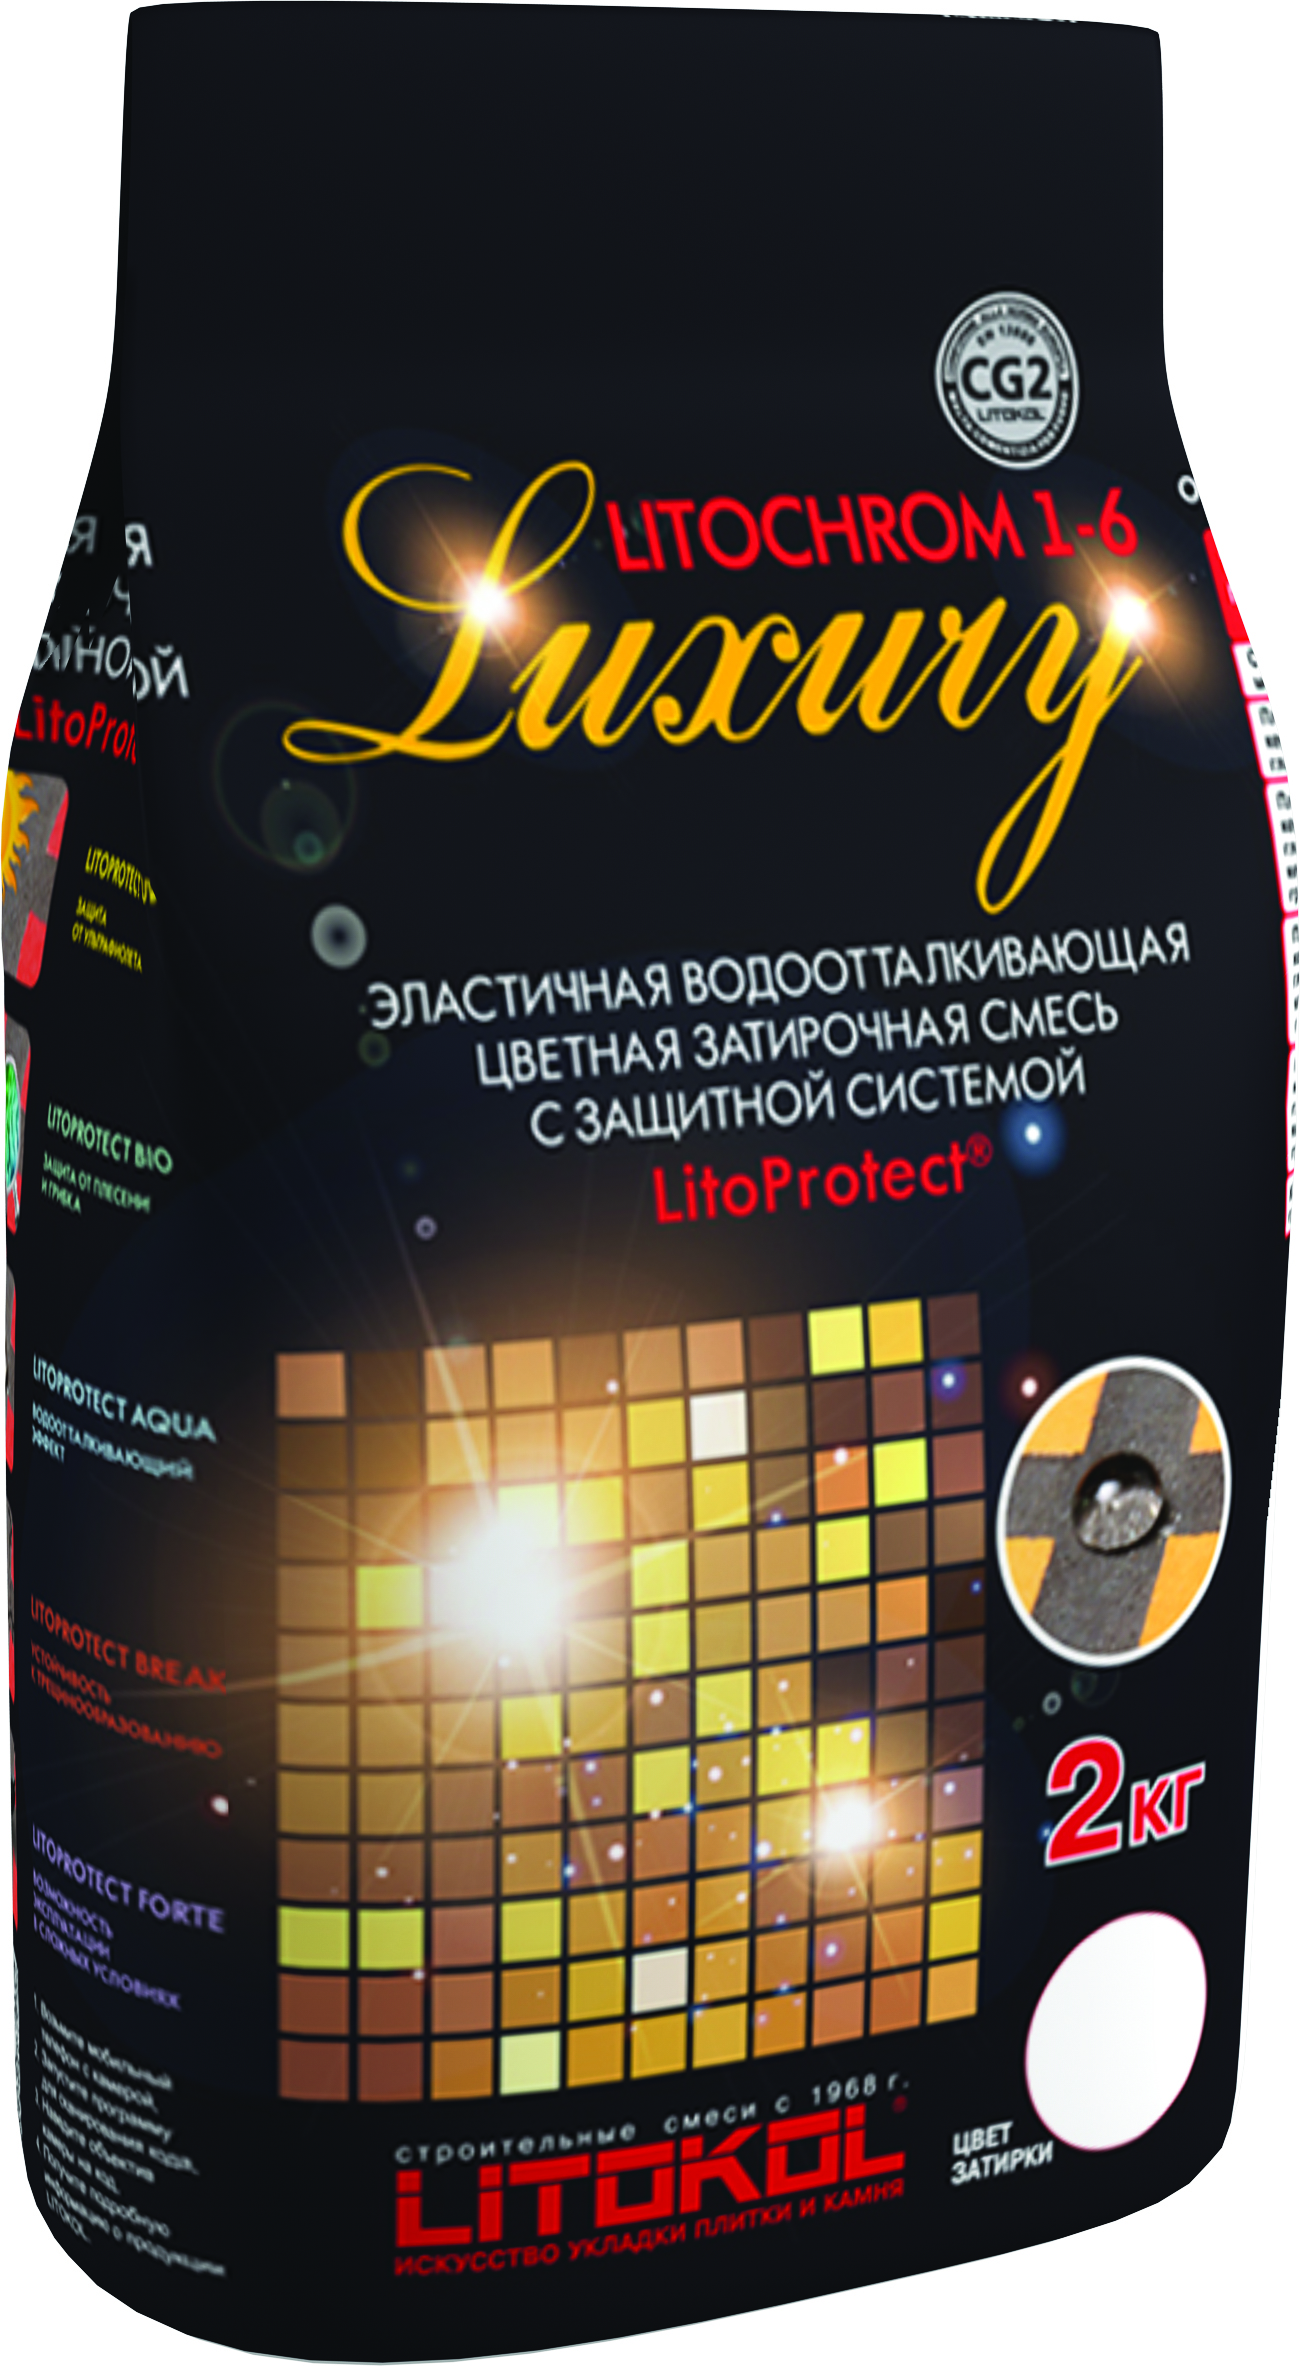 Купить Litokol Litochrom 1-6 Luxury C.480, 2 кг